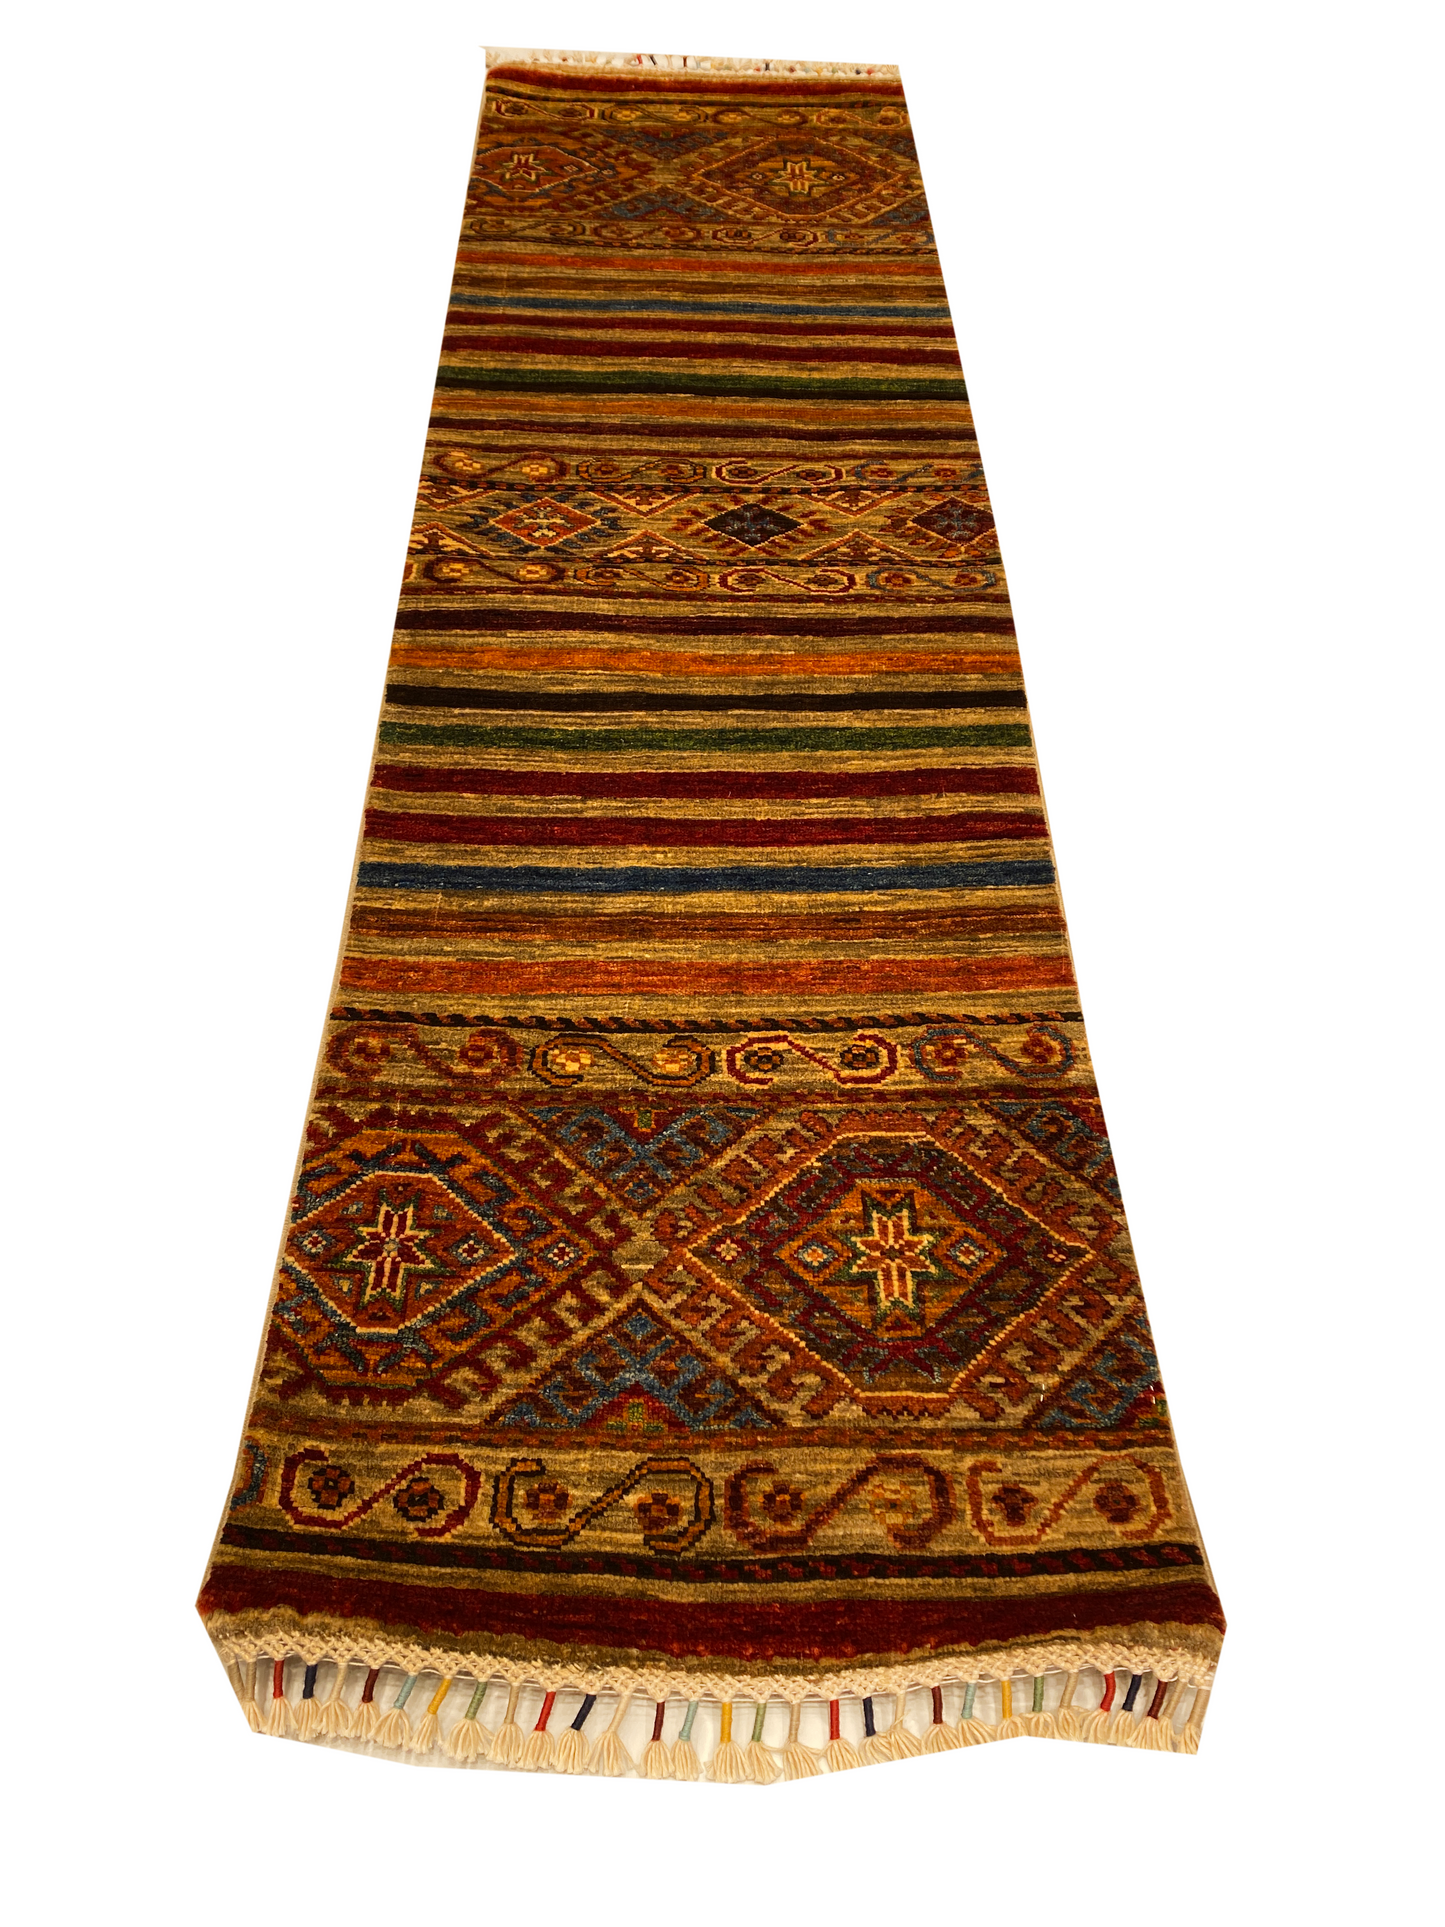 Şirvan Runner Carpet 181 X 52 cm